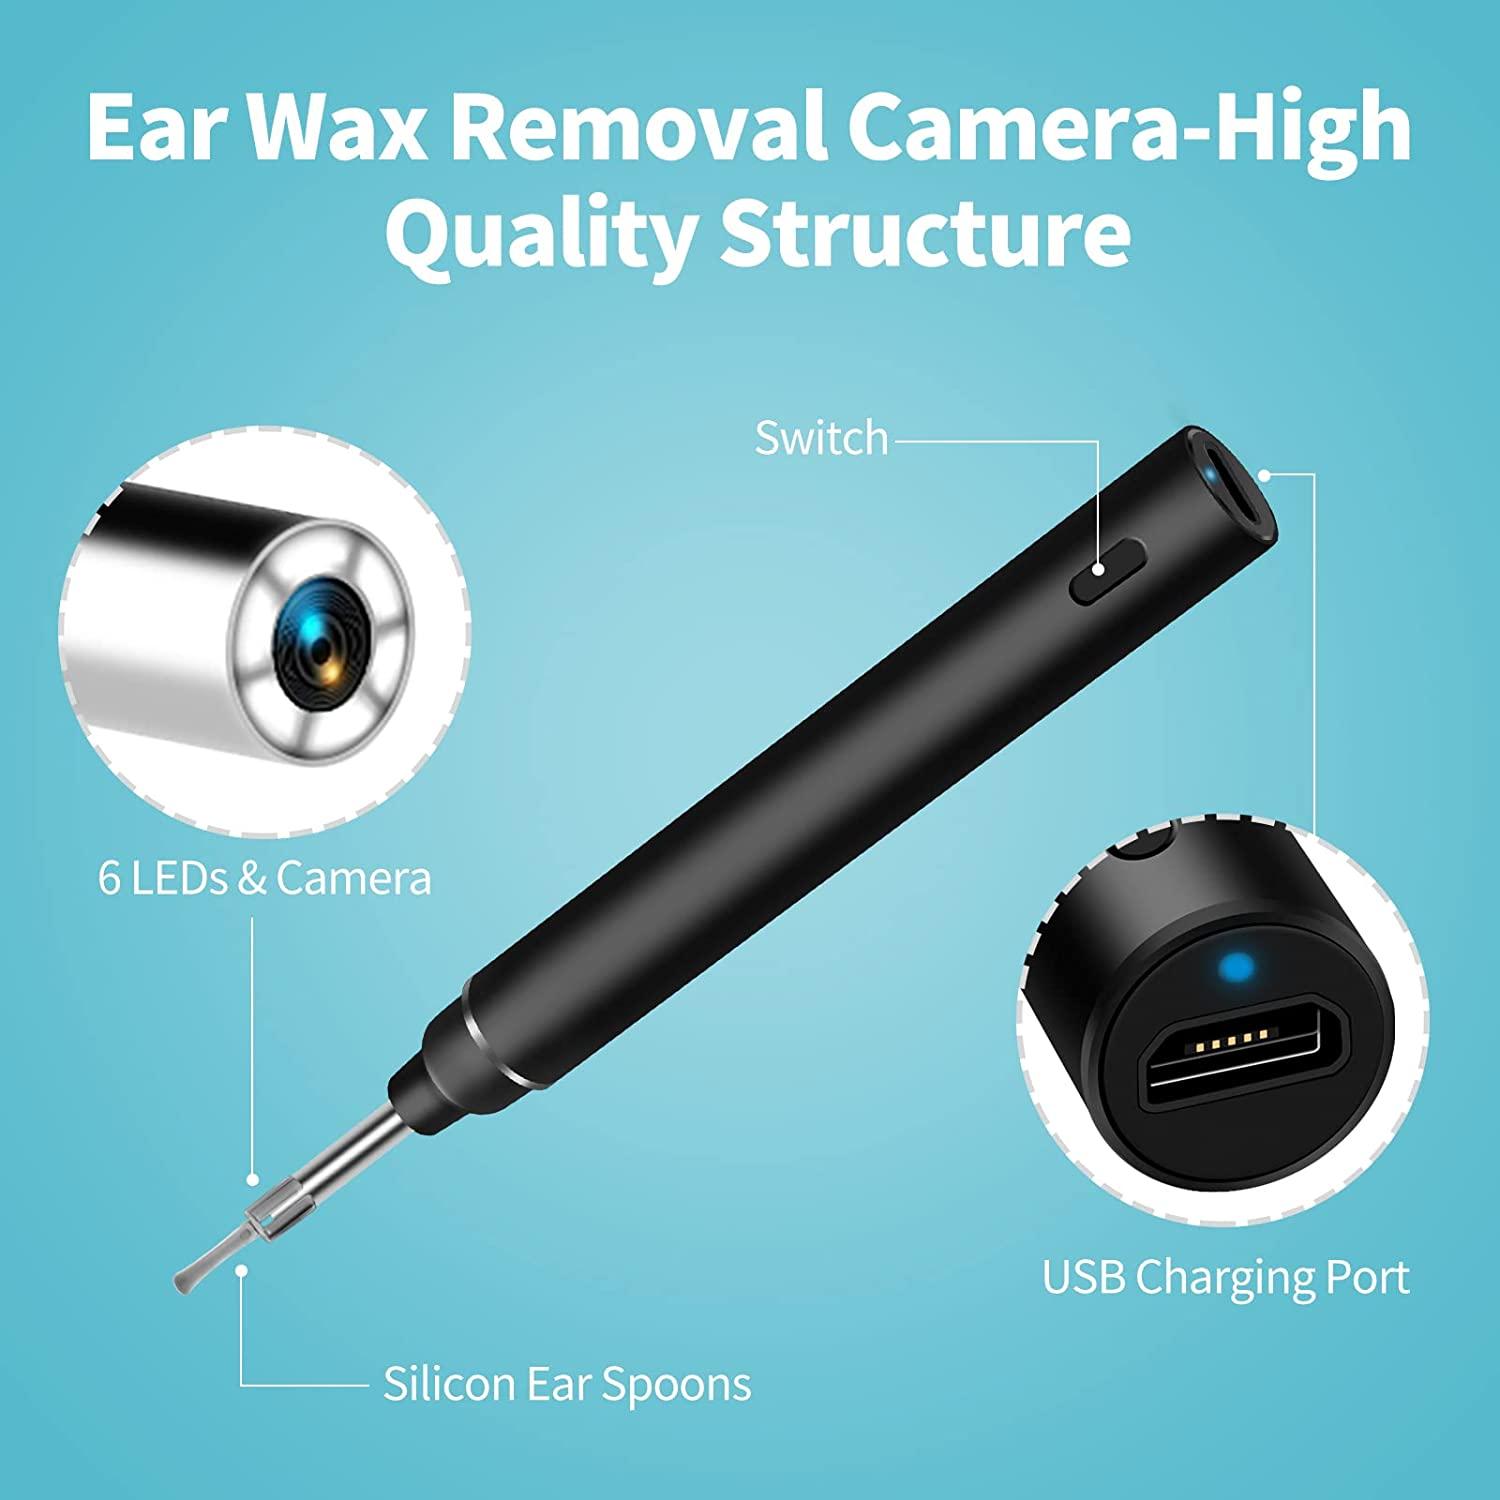 P60 WiFi Otoscope Ear Wax Removal 3.9mm HD Visual Ear Camera with 6 LED  Light Storage Box Wireless Ear Scope Endoscope with Eax Wax Remover Tool  Phone